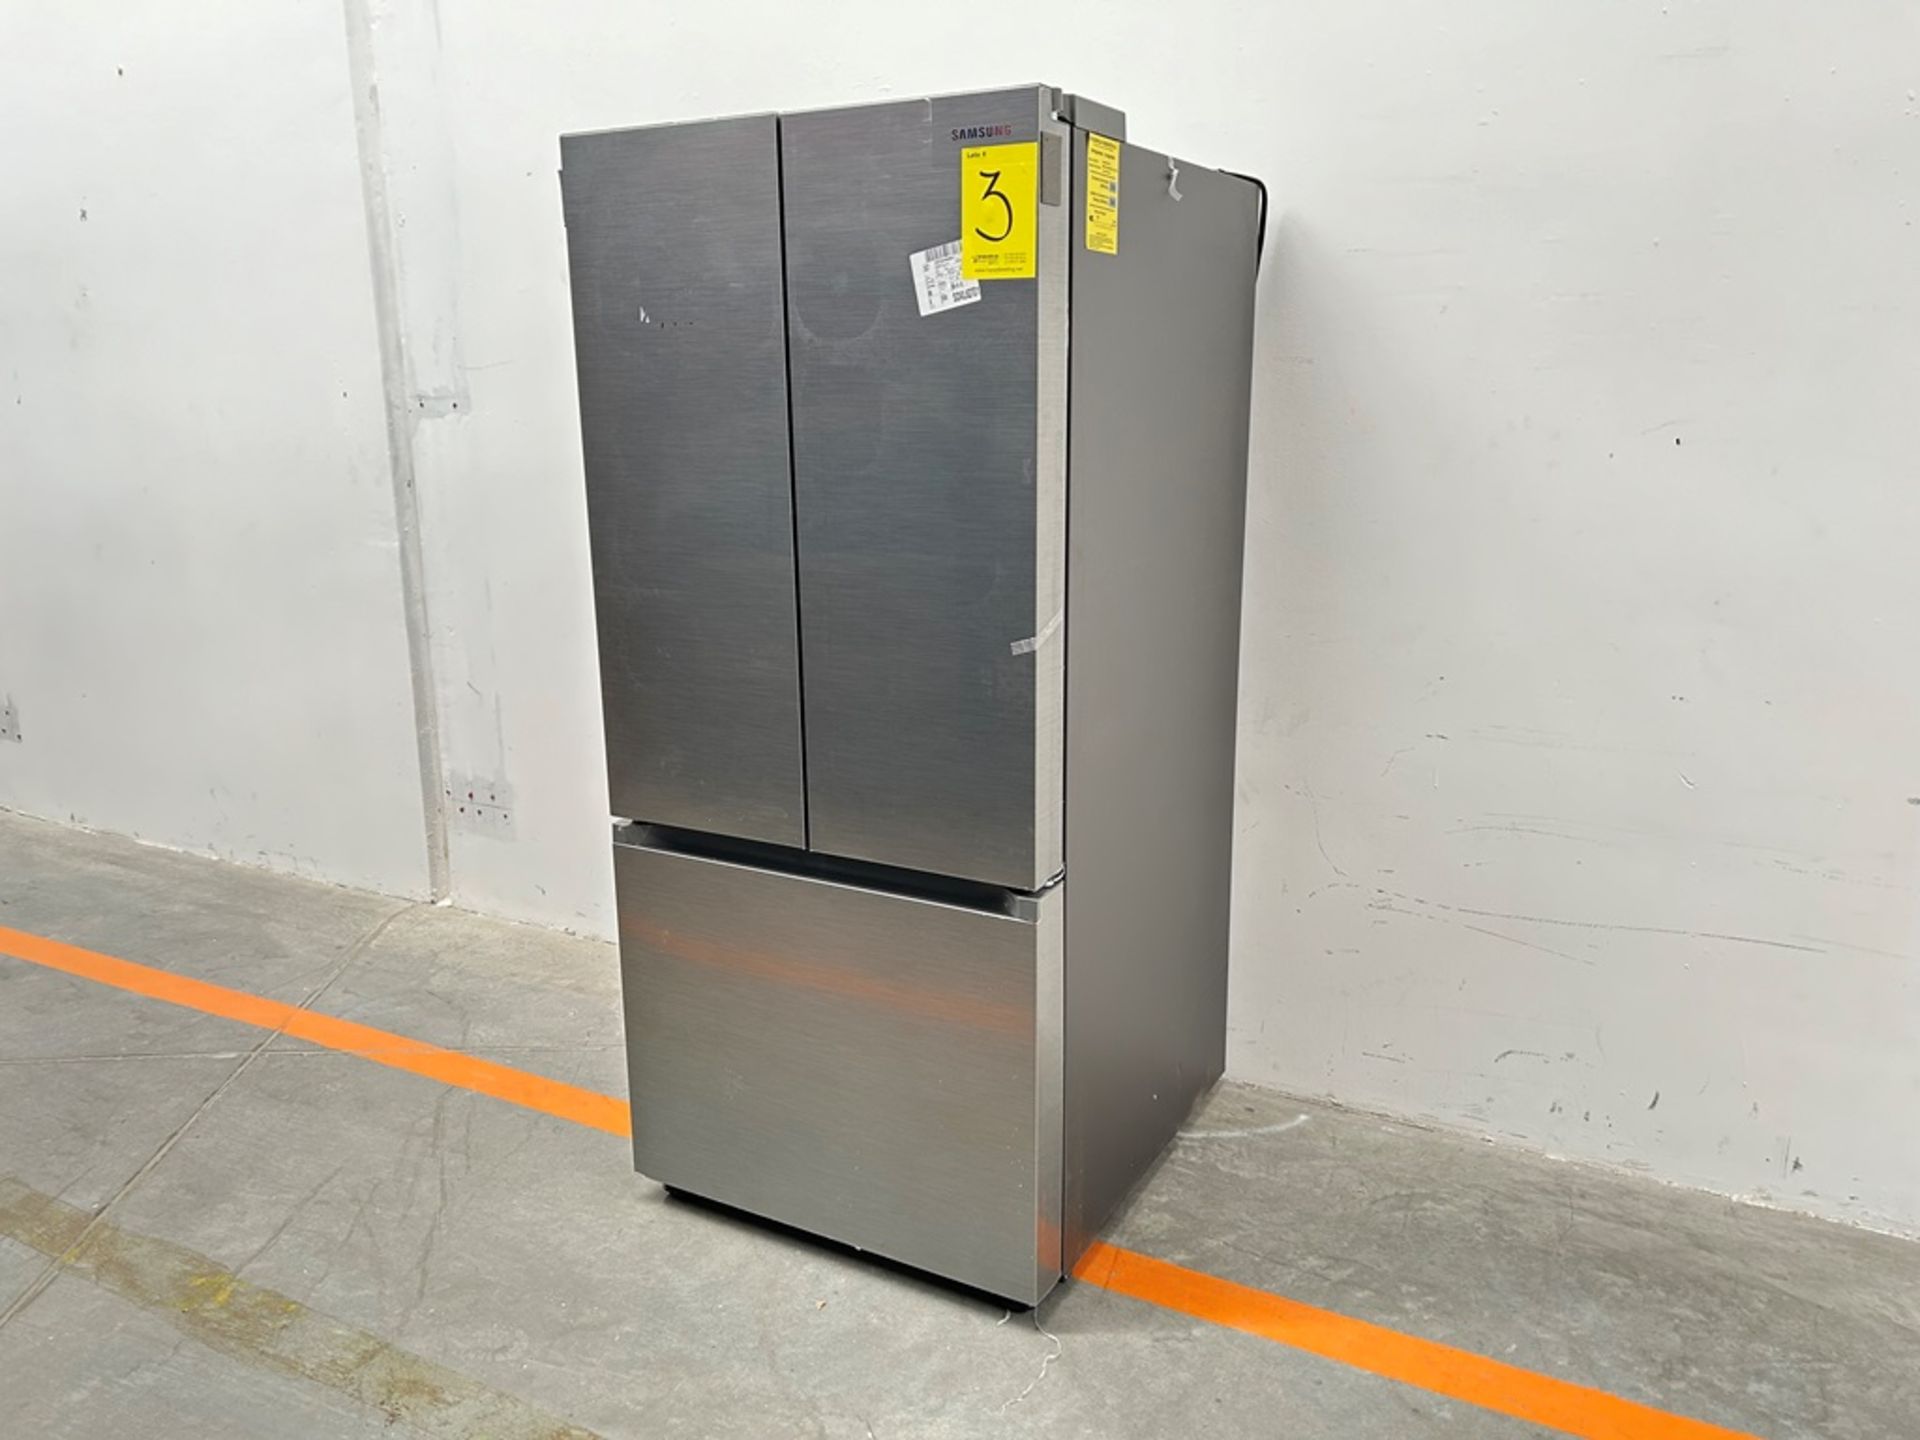 (NUEVO) Refrigerador Marca SAMSUNG, Modelo RF22A4010S9, Serie 01874K, Color GRIS - Image 2 of 11